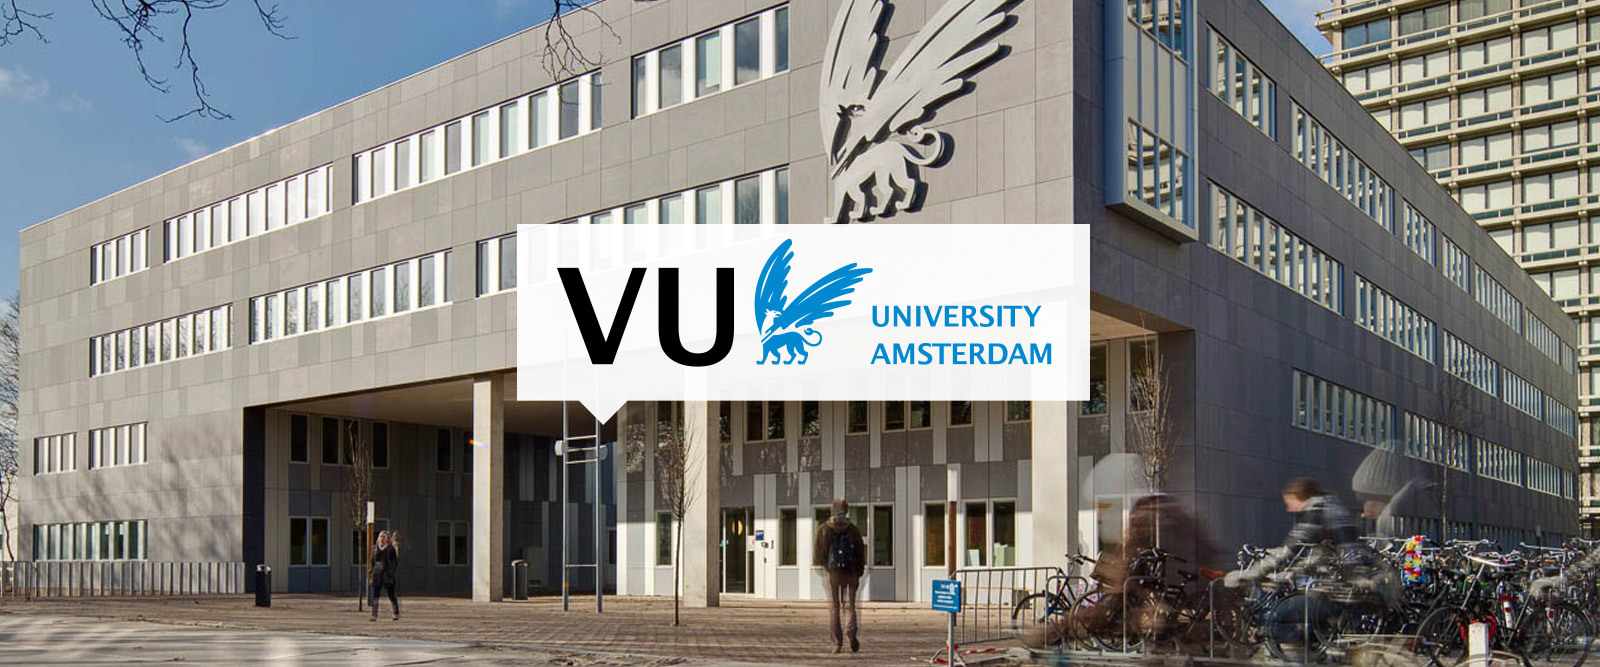 University Amsterdam (VU) (Amsterdam, Netherlands)